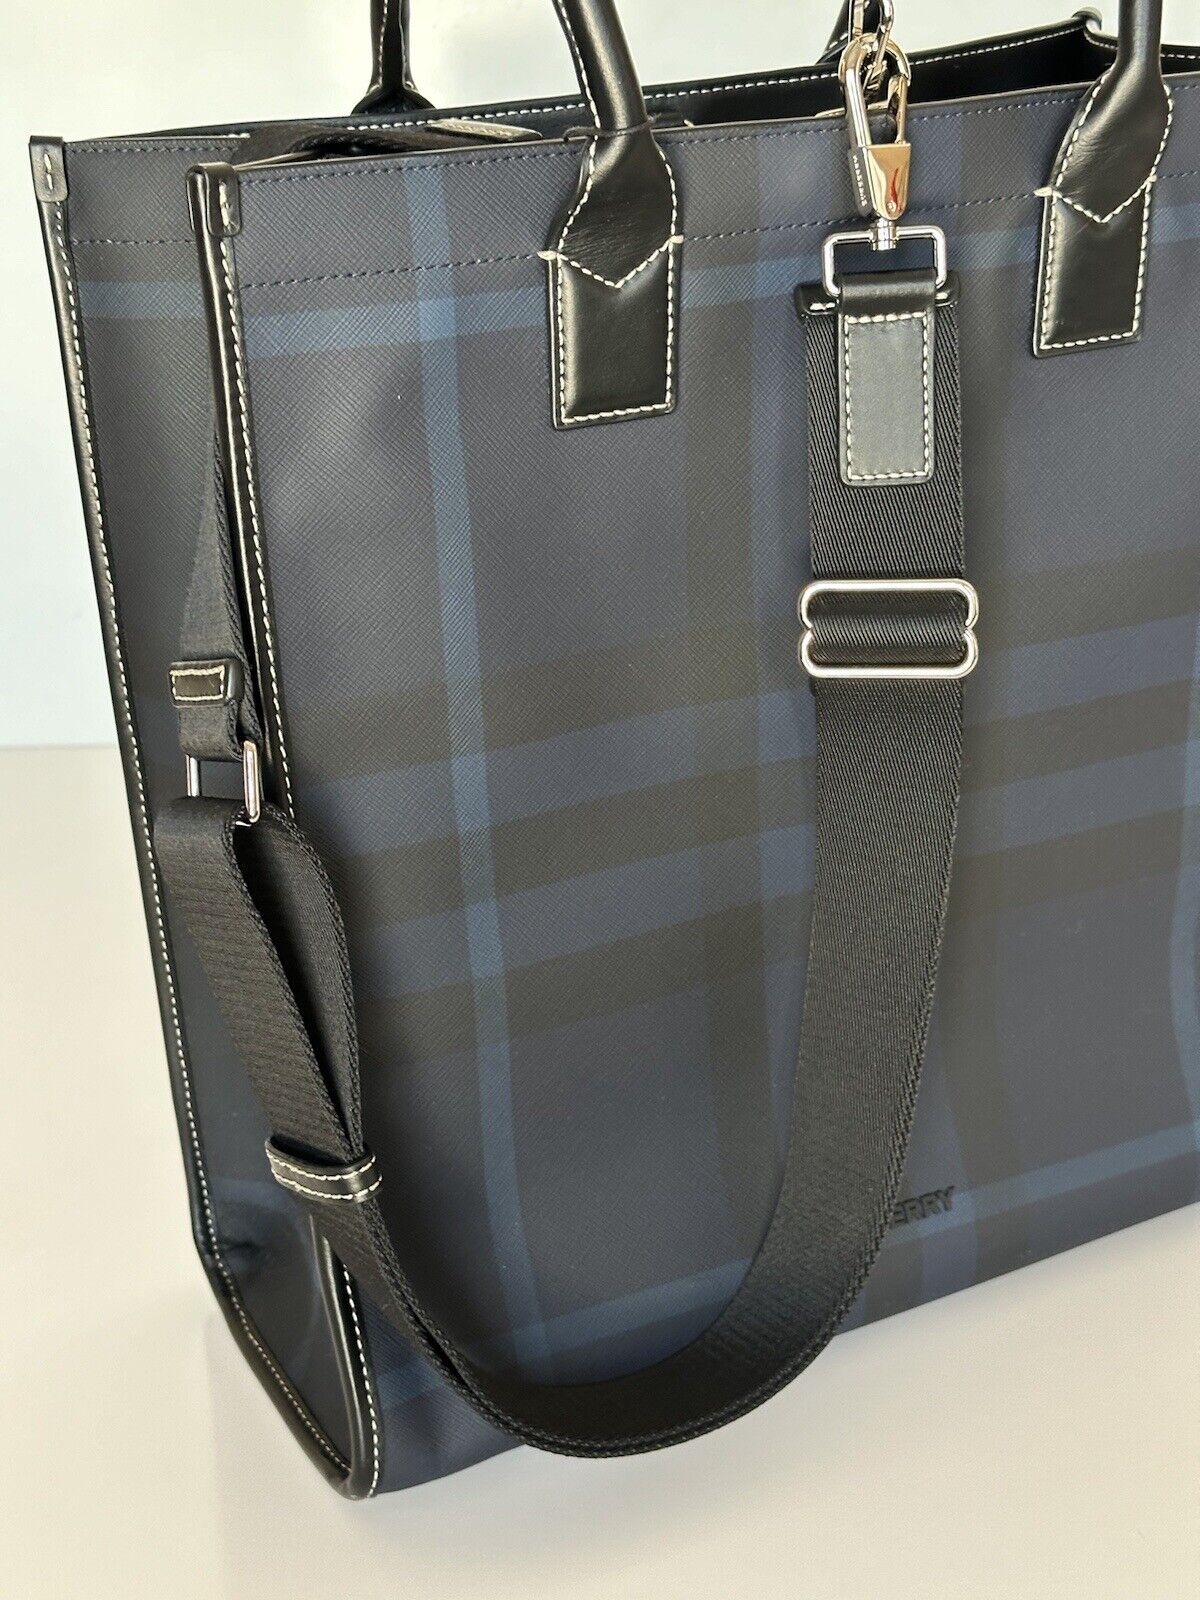 Burberry Denny Tote House Check Shoulder Bag Navy Blue 80594571 NWT $1650 Italy